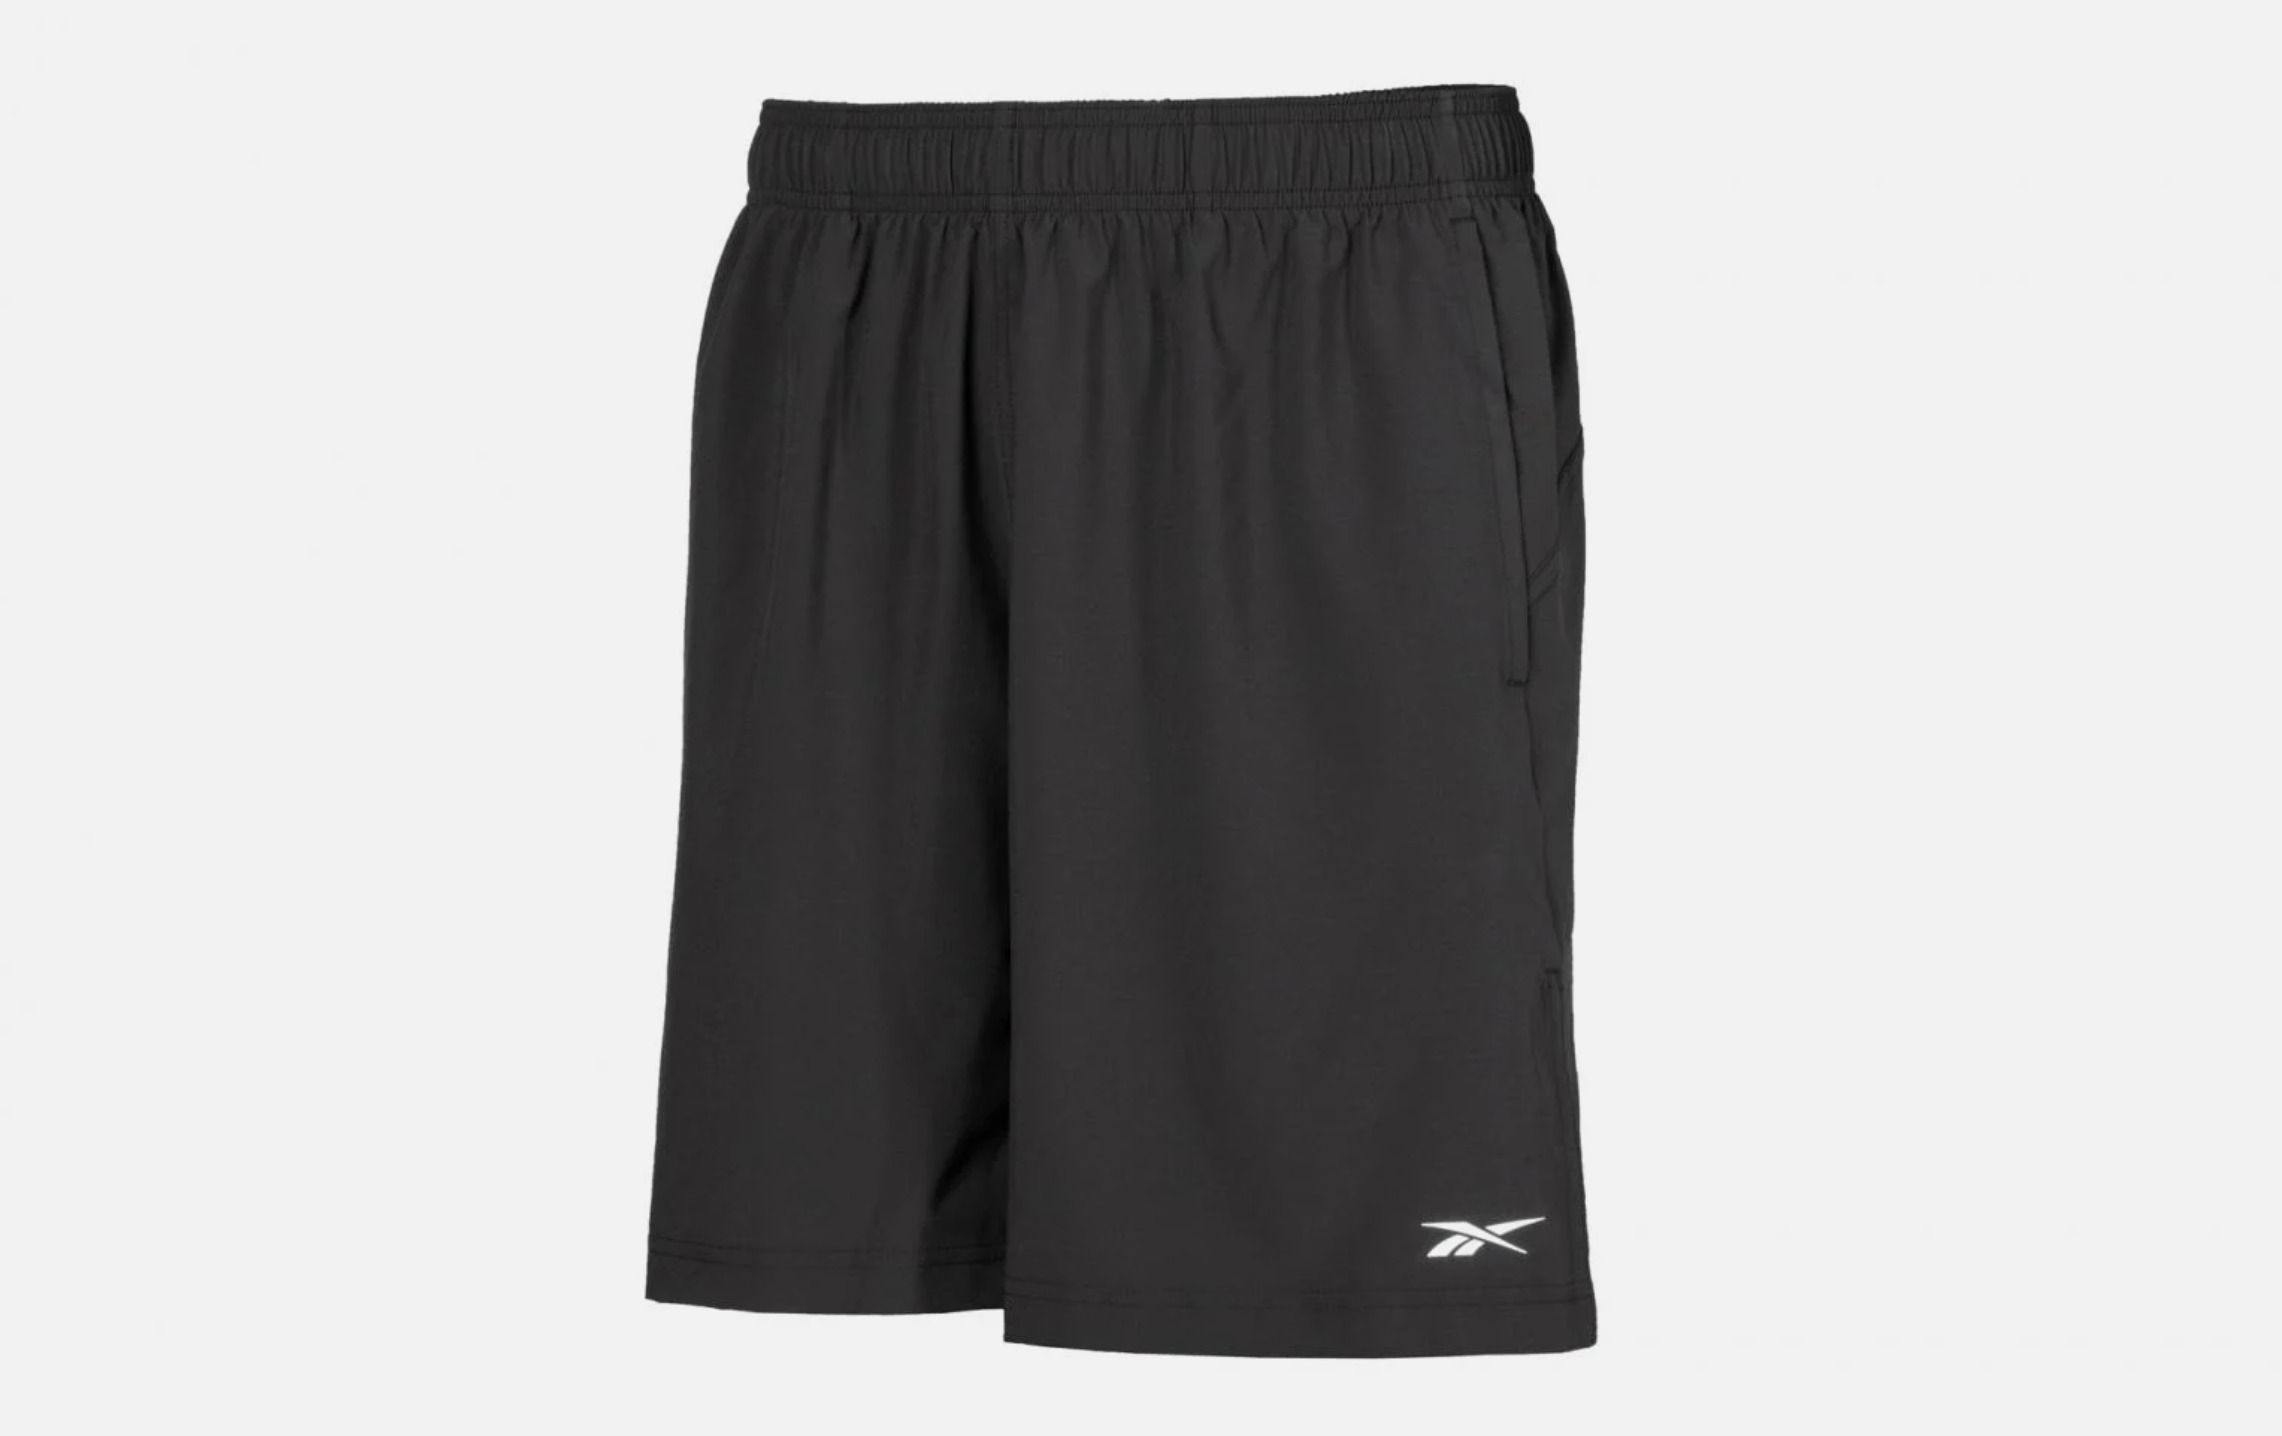 Buy > nike cross training shorts > in stock